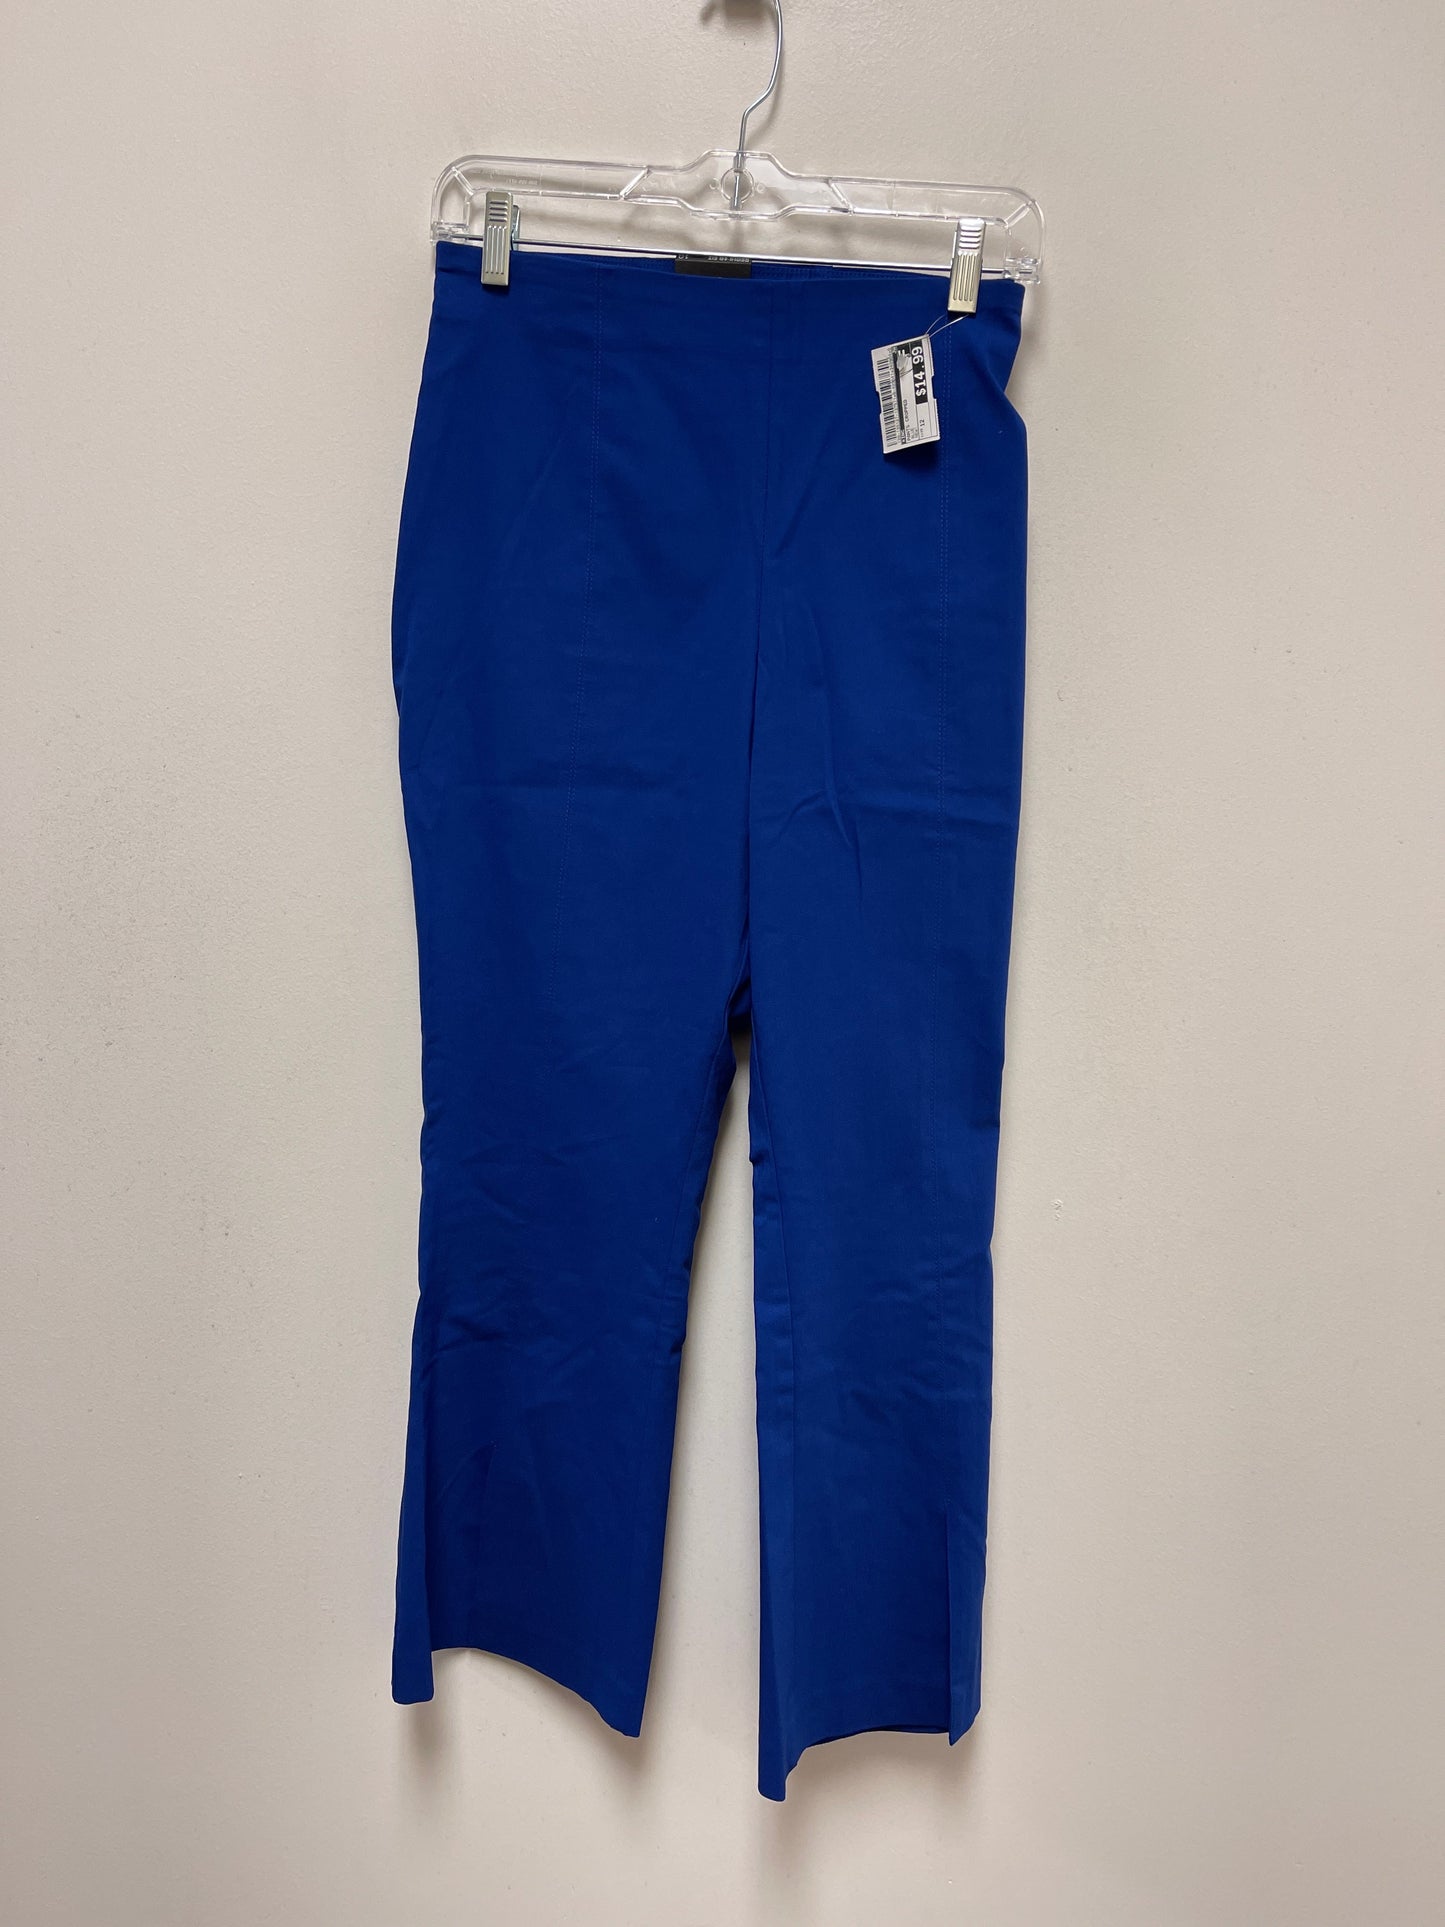 Blue Pants Cropped Inc, Size 12